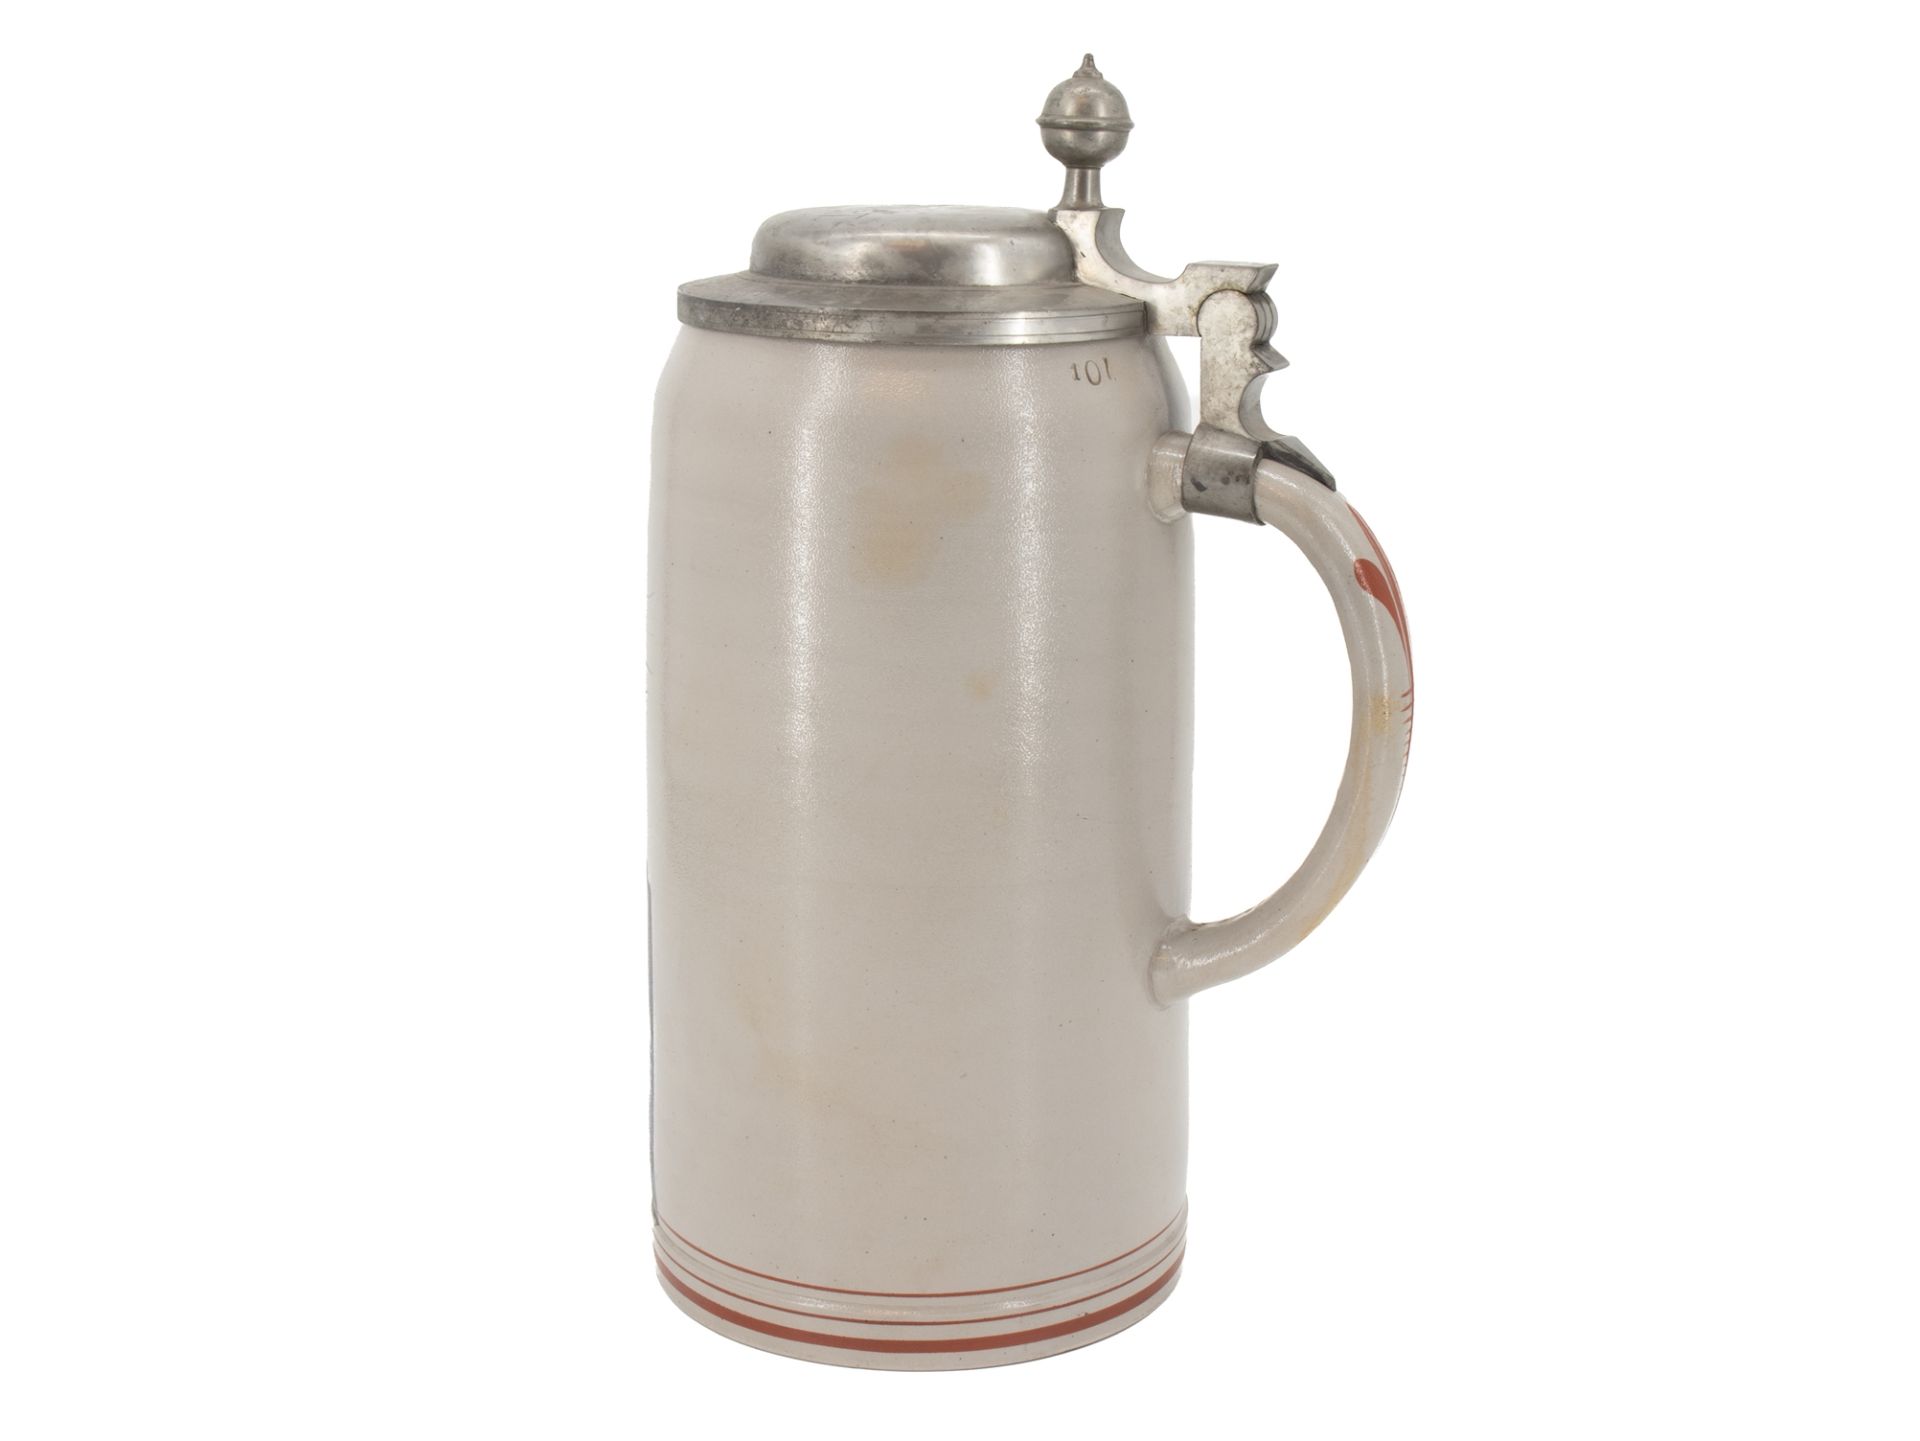 Extraordinary jug, Hofbräu Munich, 10 litres, Münchner Kindl, around 1900. - Image 3 of 8